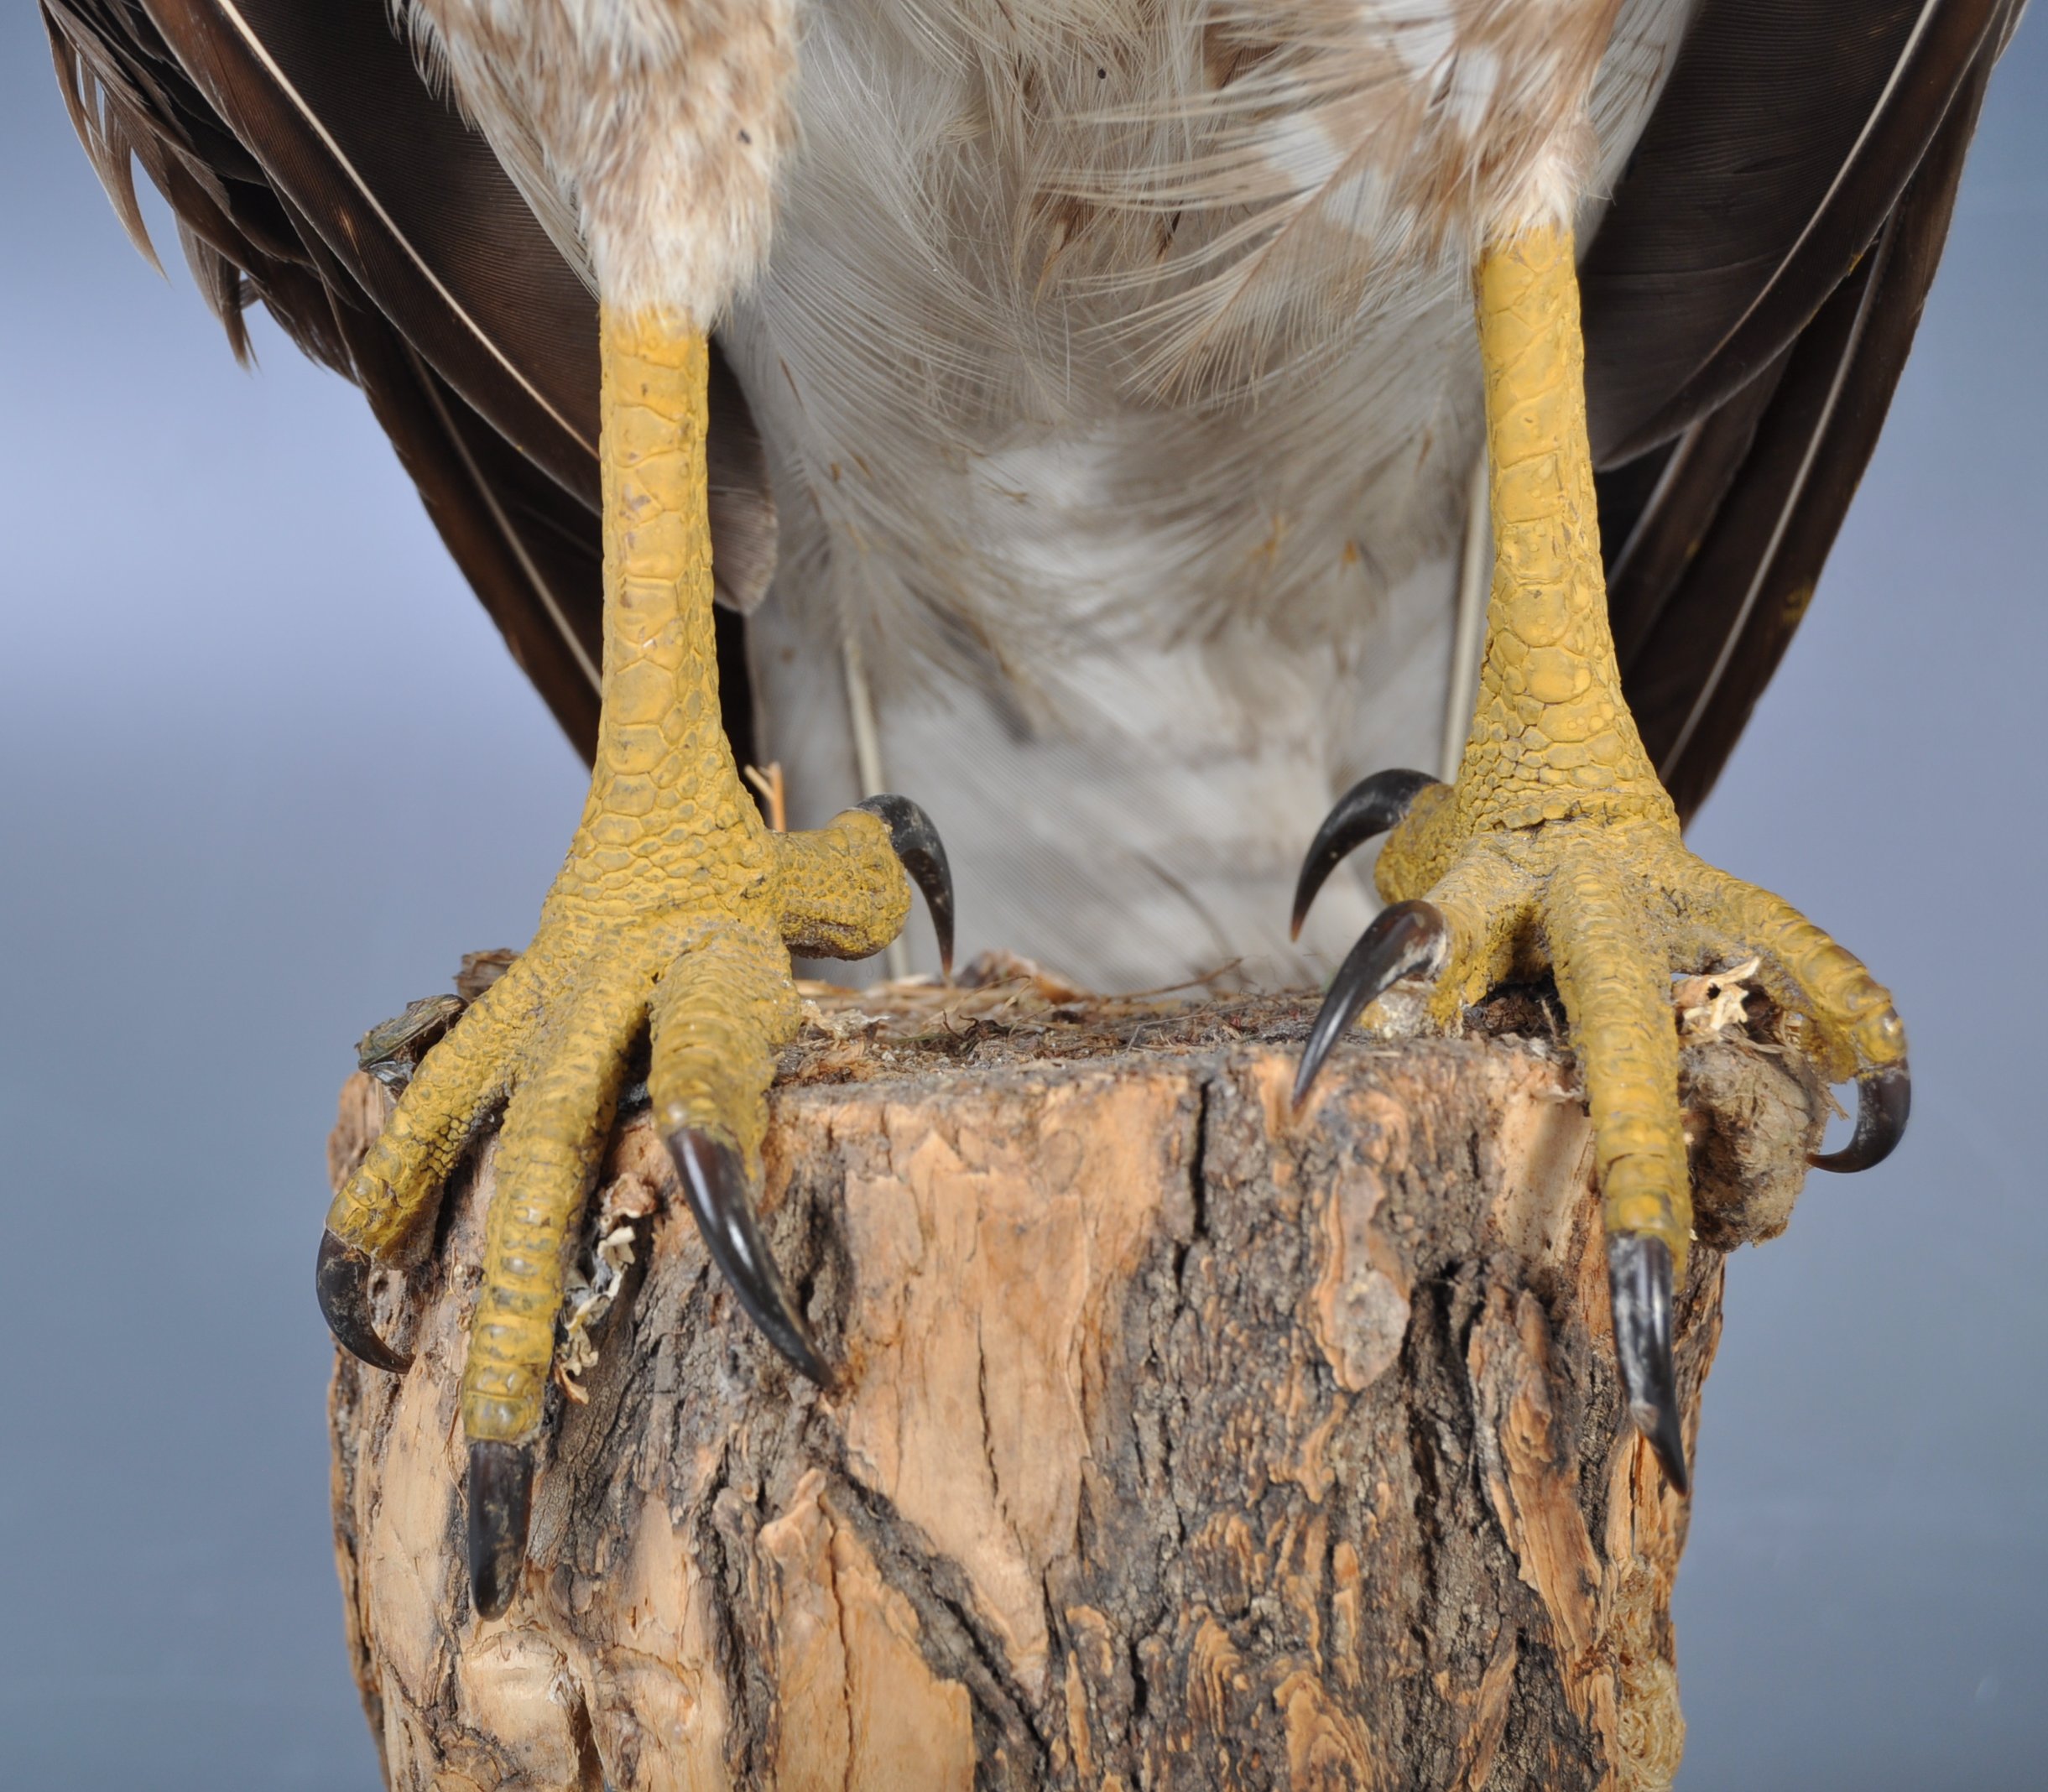 ANTIQUE TAXIDERMY EXAMPLE OF A BUZZARD BIRD - Image 5 of 6